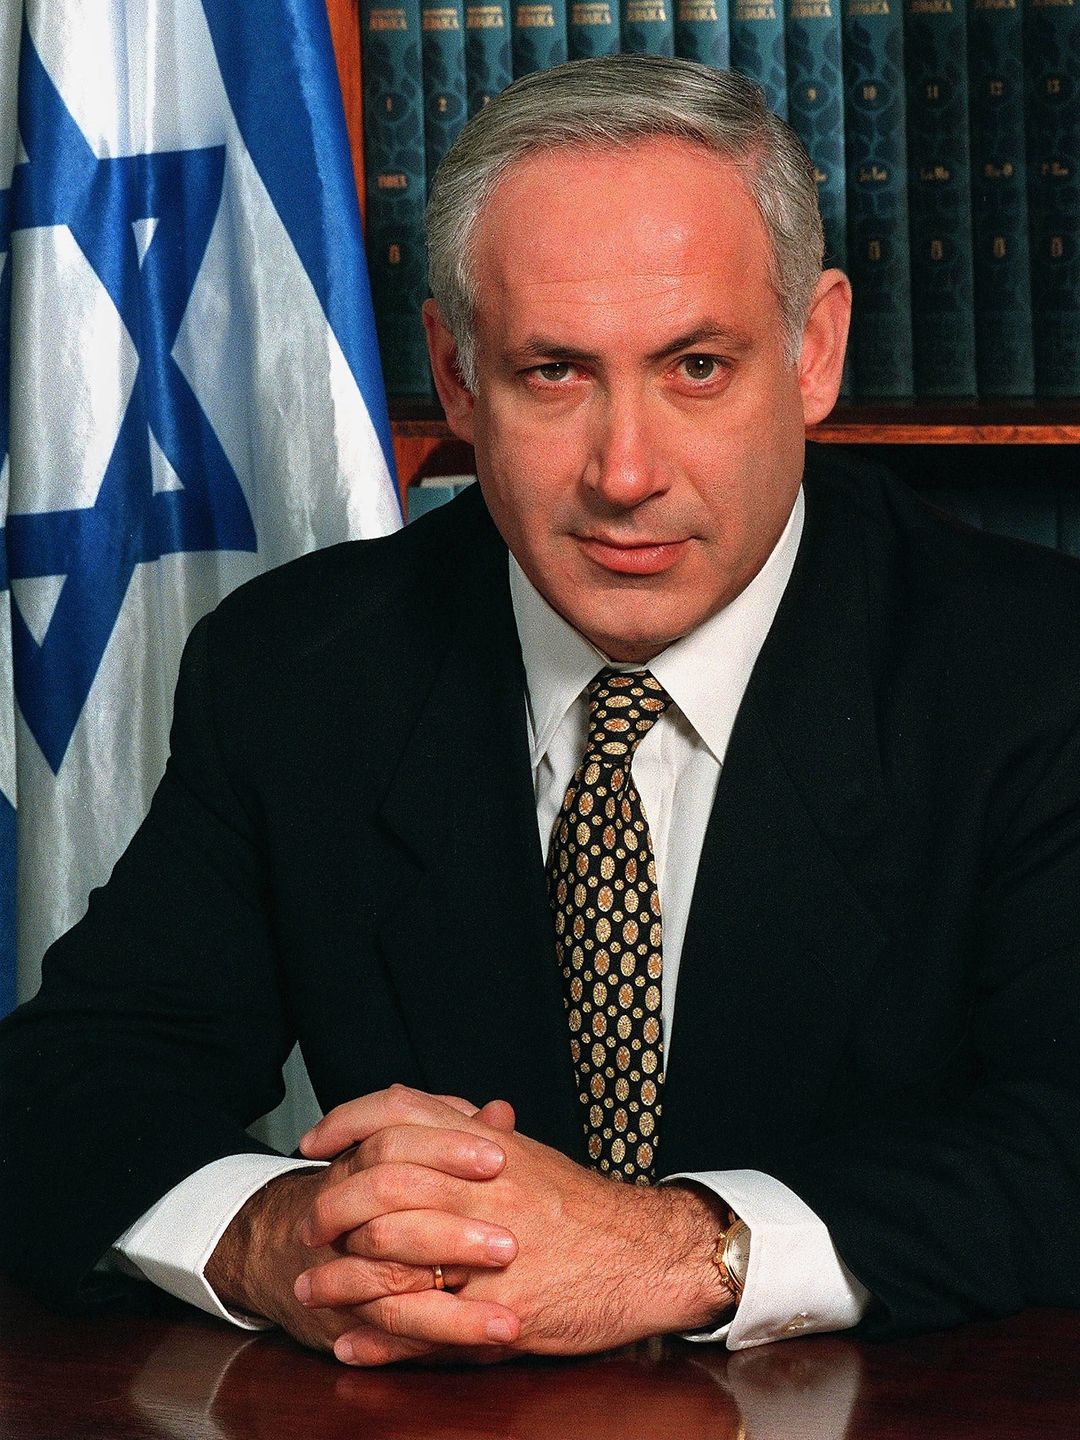 Benjamin Netanyahu interesting facts